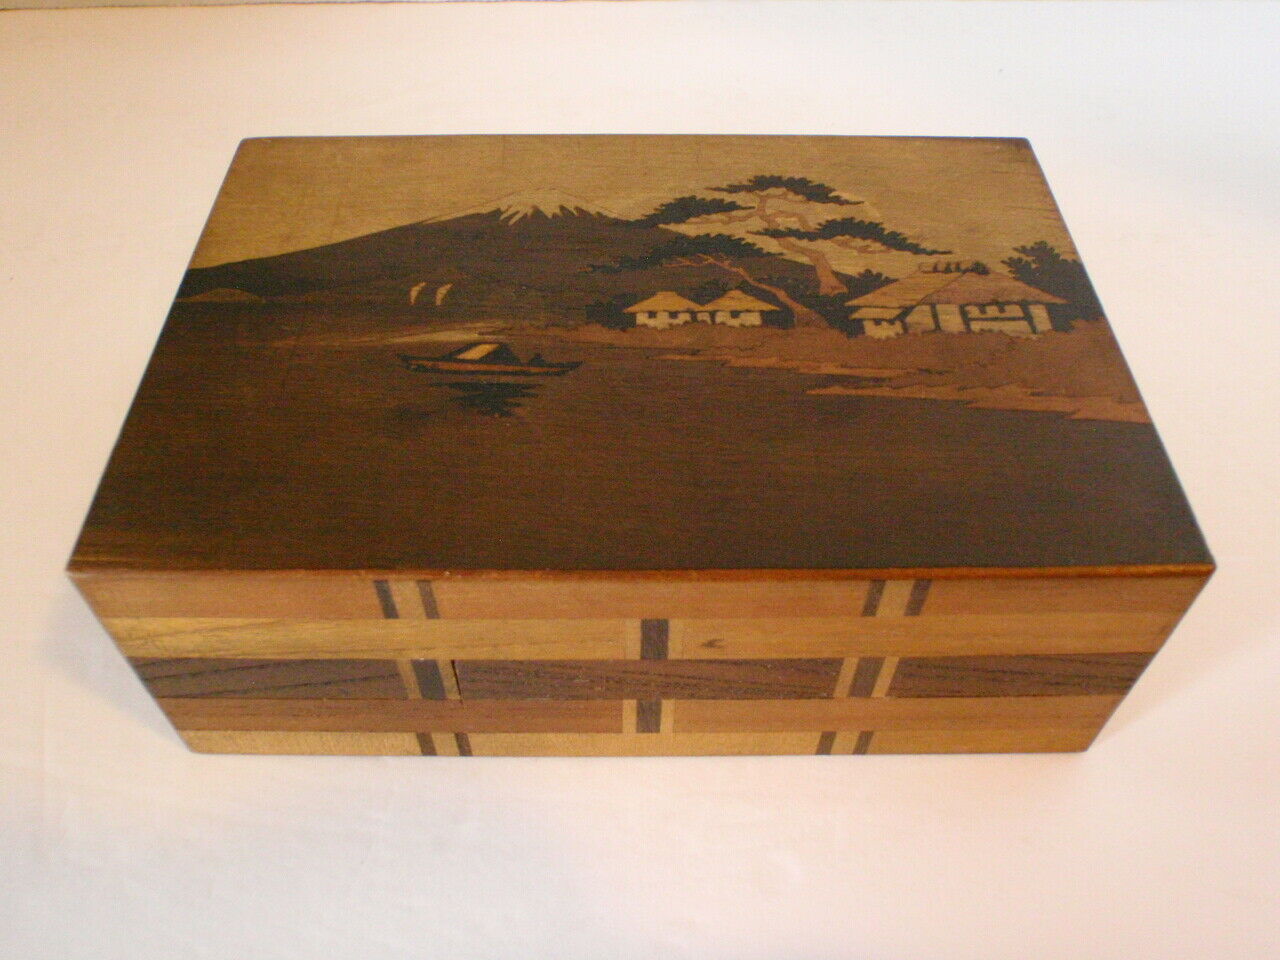 Vtg 1920's-1930's Japanese Wooden Inlay Puzzle Box Secret Compartment Mt Fuji